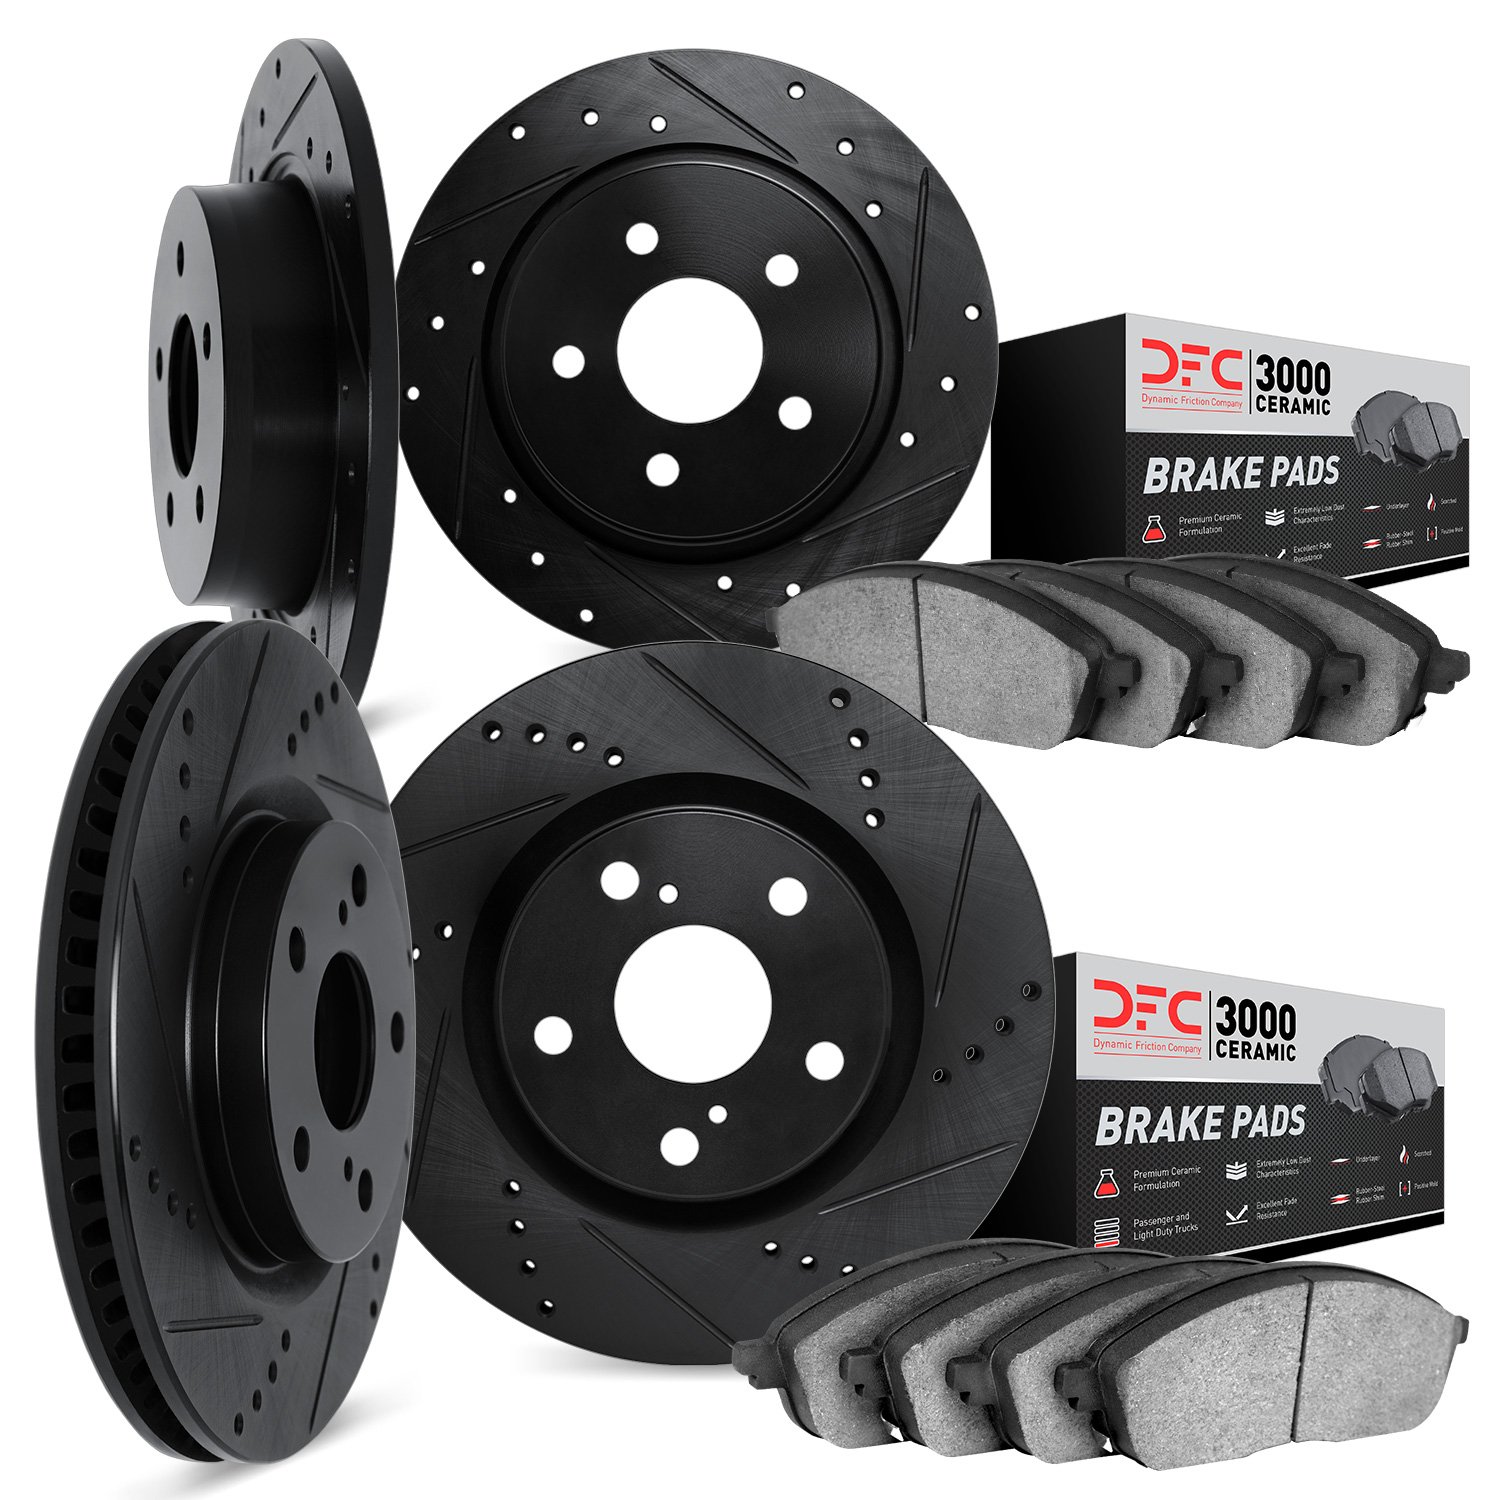 8304-76054 Drilled/Slotted Brake Rotors with 3000-Series Ceramic Brake Pads Kit [Black], 2004-2008 Lexus/Toyota/Scion, Position: